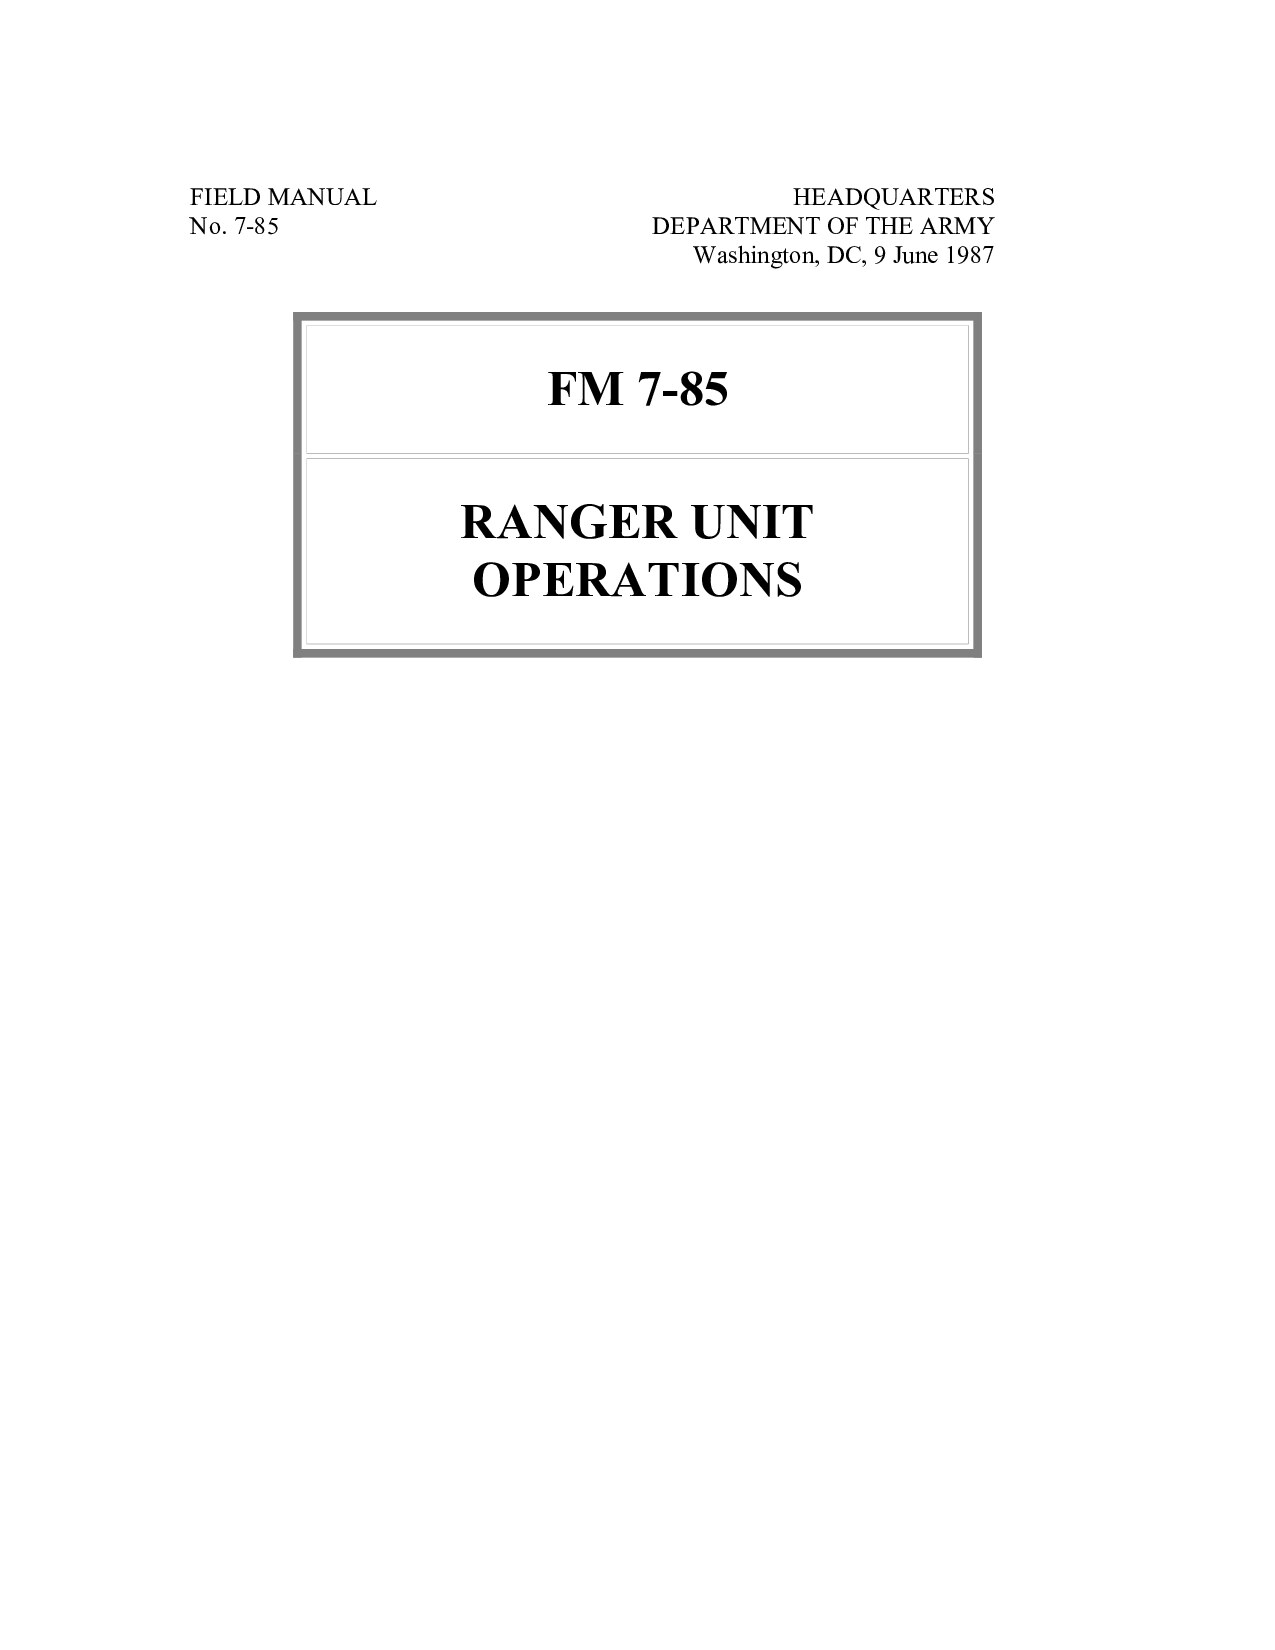 FM 7-85 Ranger Unit Operations